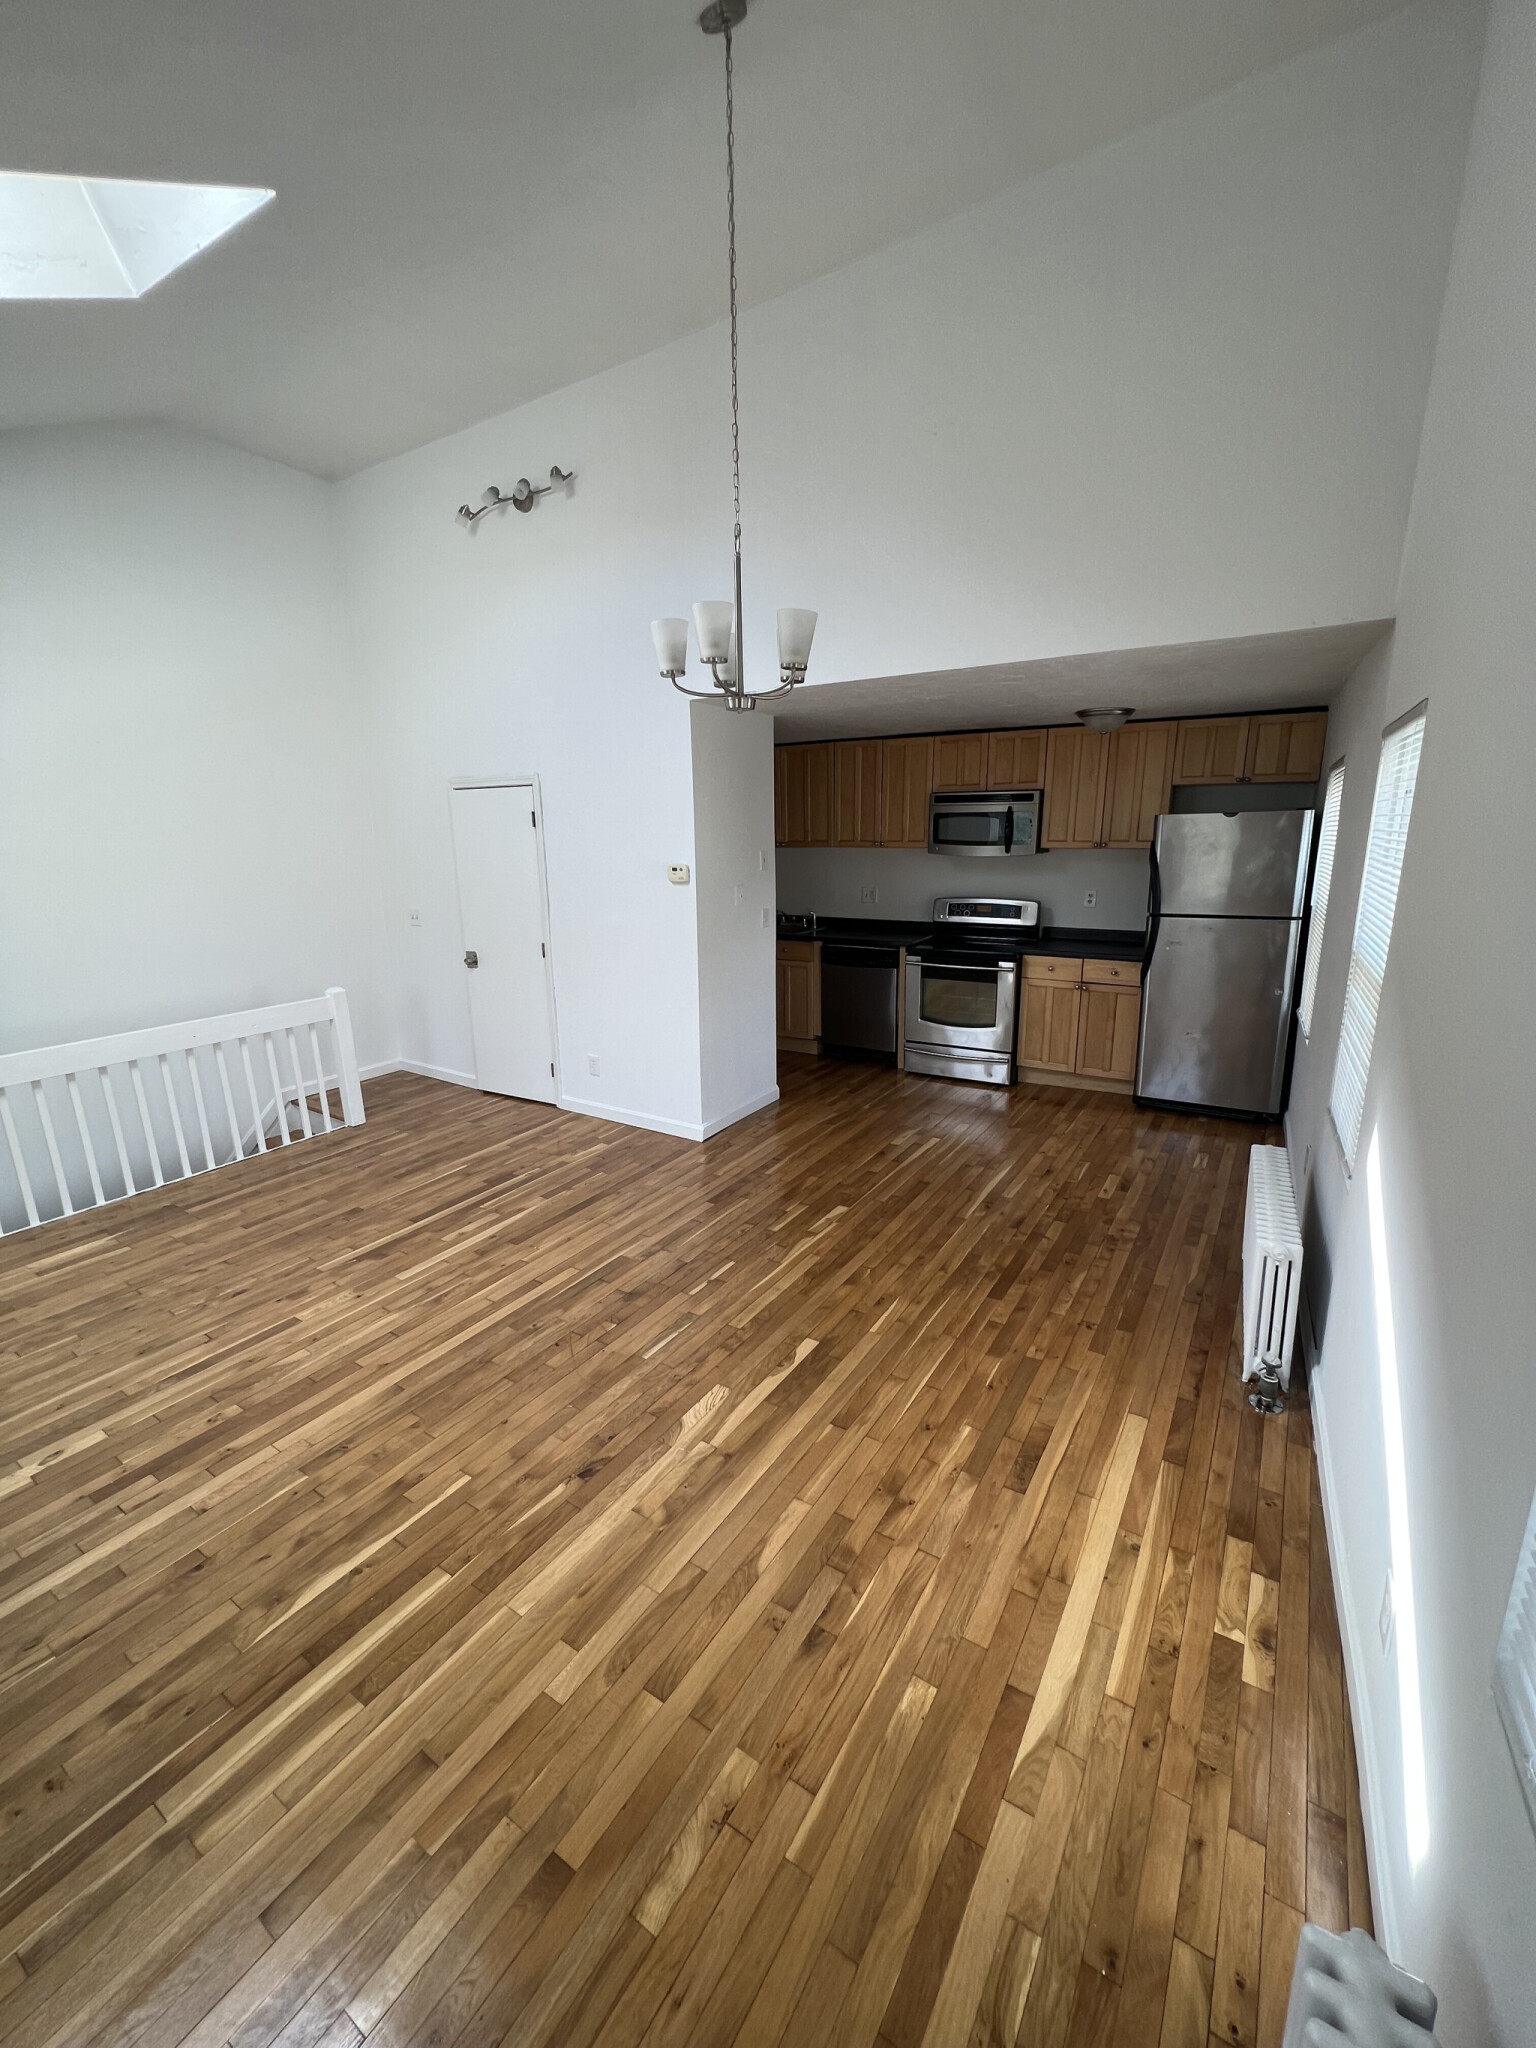 Photos of apartment on Shepard St.,Boston MA 02135